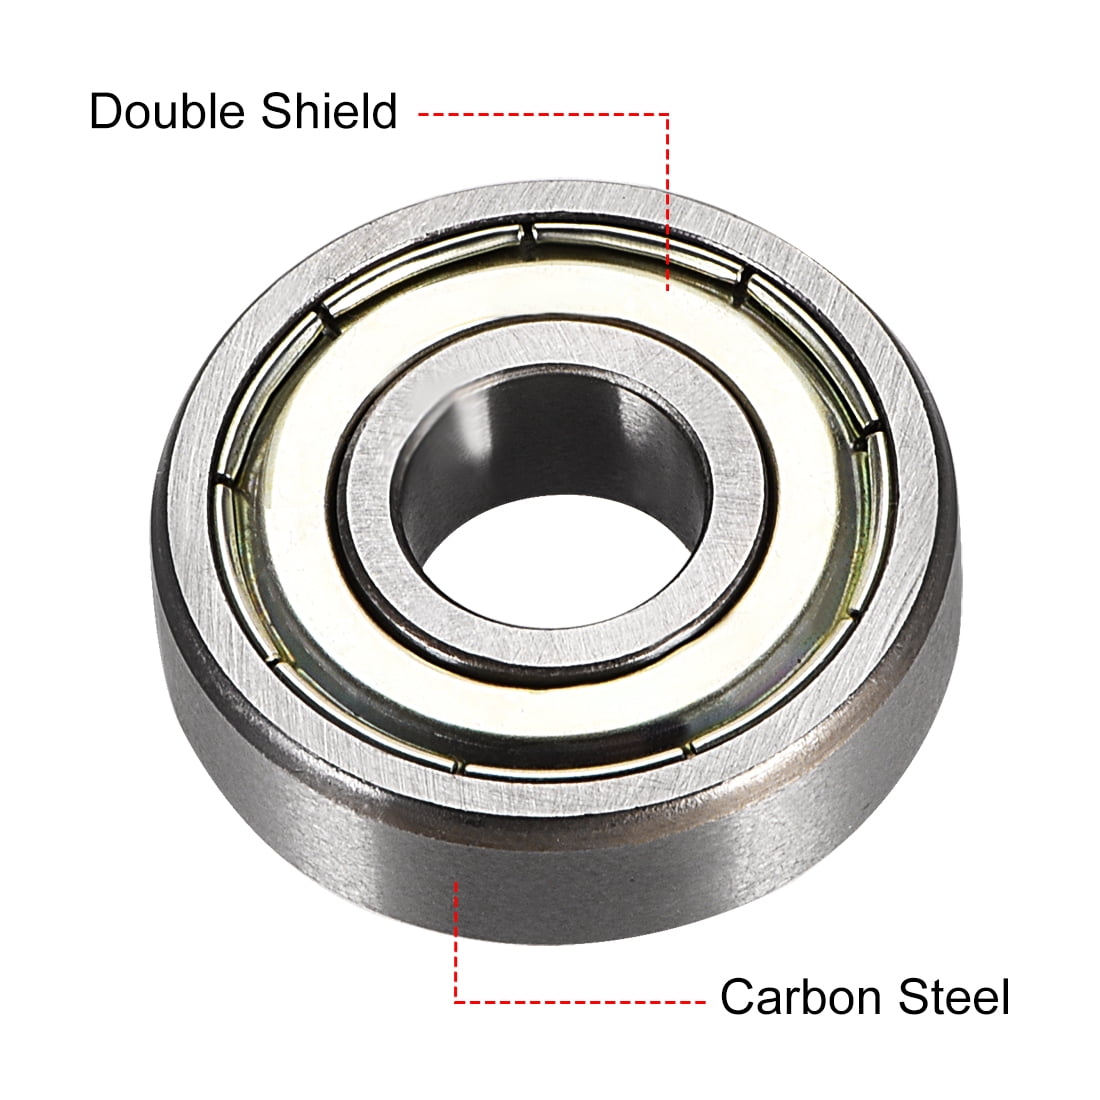 609ZZ Ball Bearings Double Shield 9mmx24mmx7mm High Carbon Steel Z1 10pcs